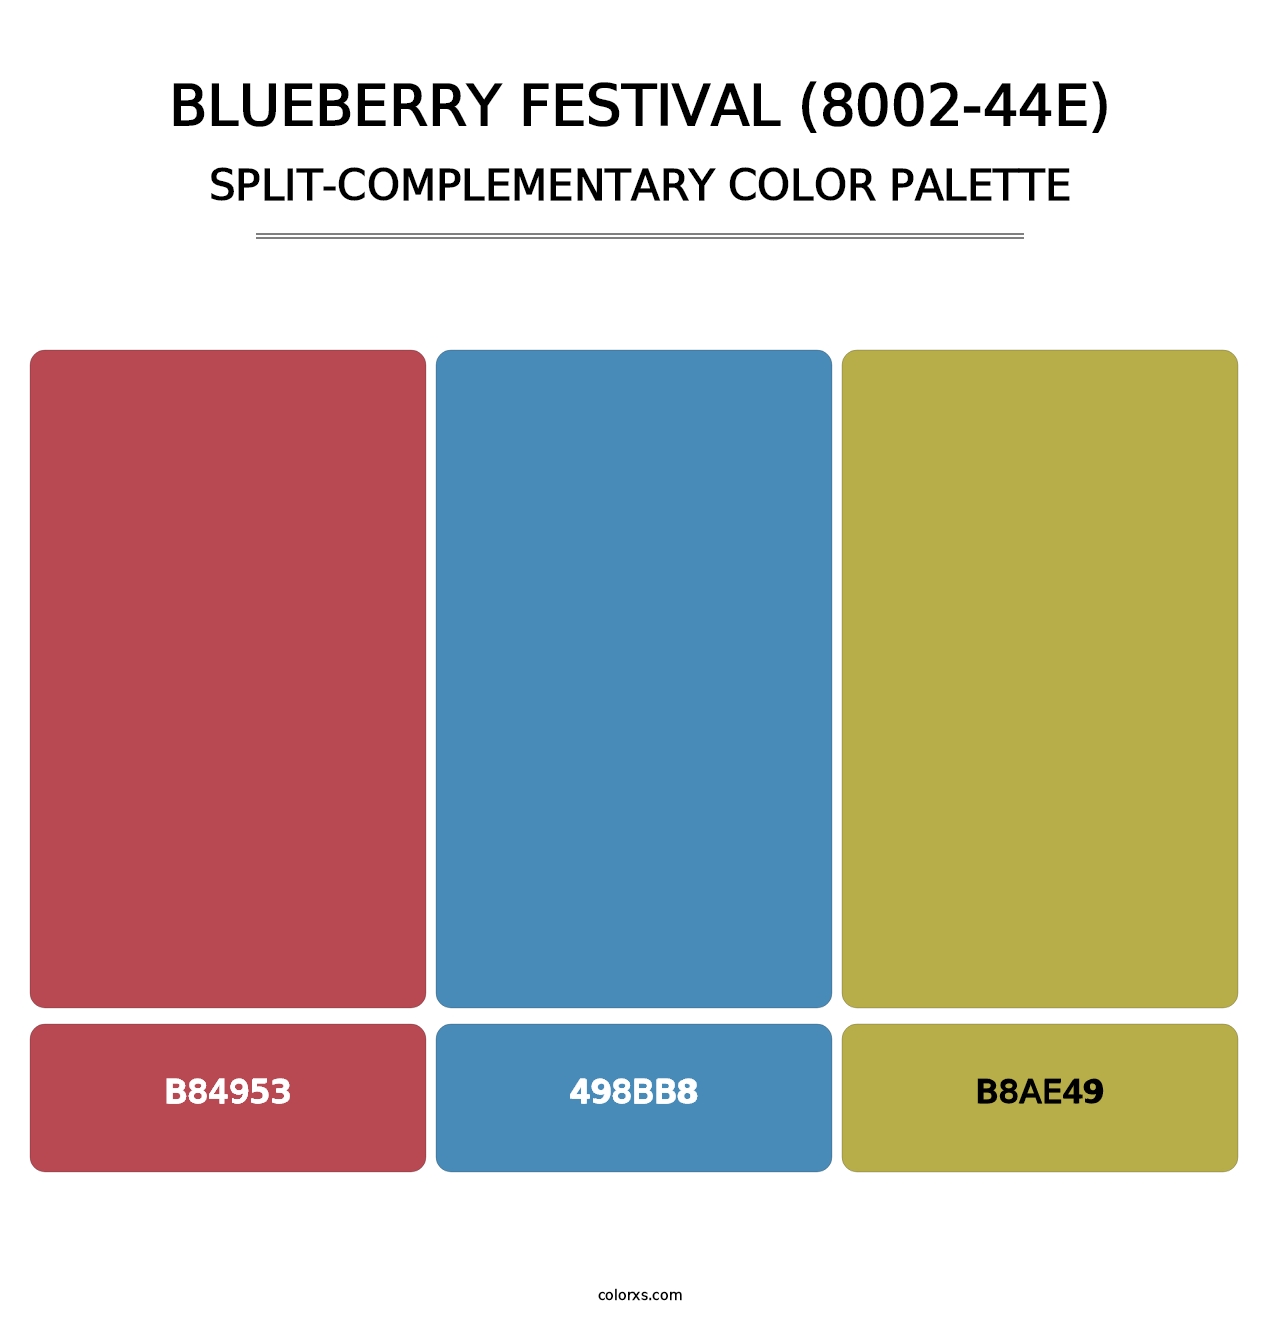 Blueberry Festival (8002-44E) - Split-Complementary Color Palette